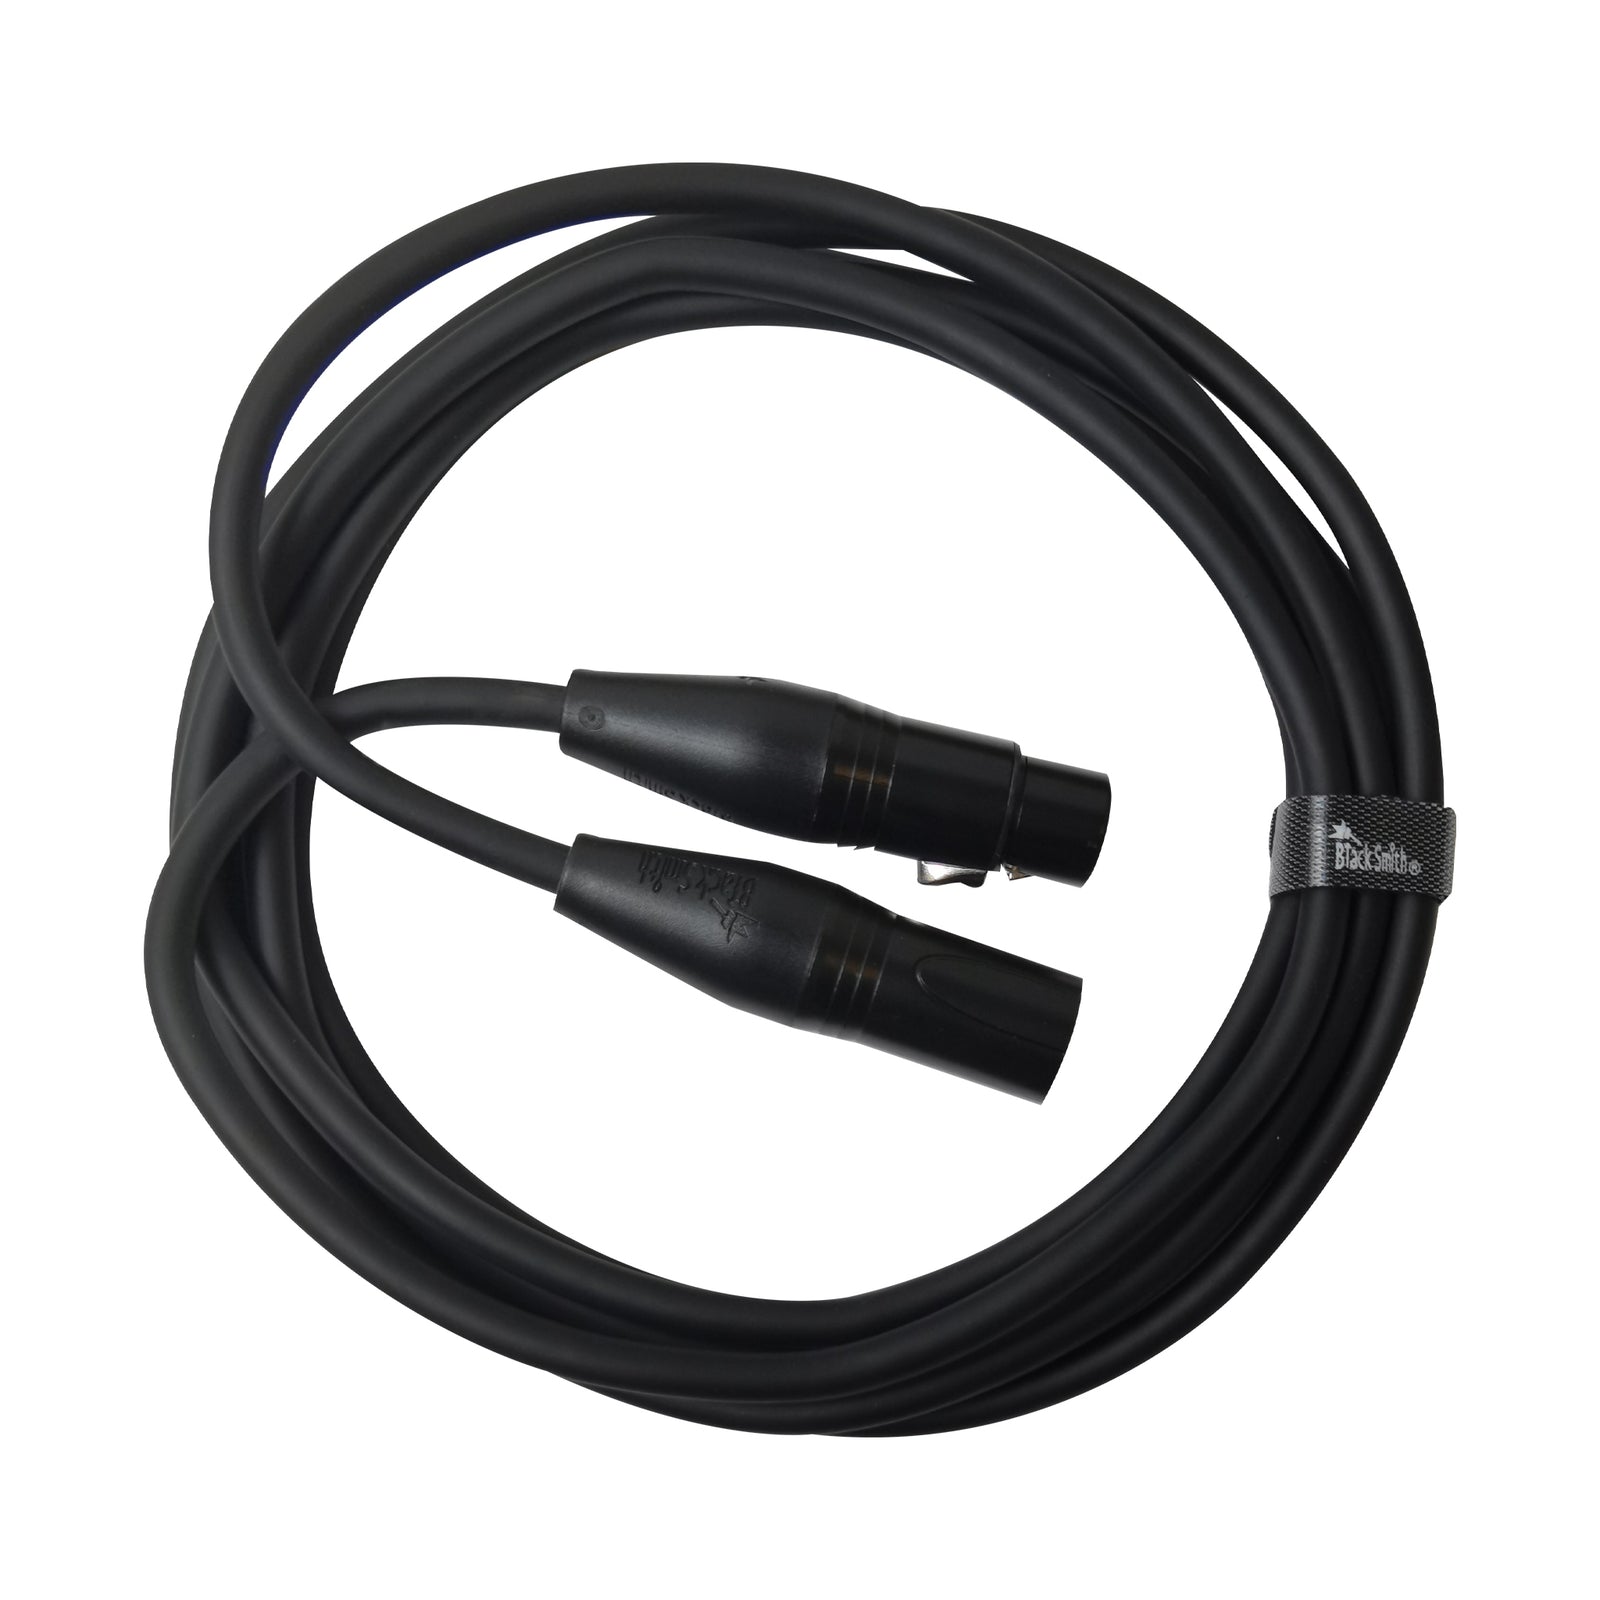 Black Smith VS-STFXLR3 Mic Cable 3M - XLR (Female) to XLR (Male)